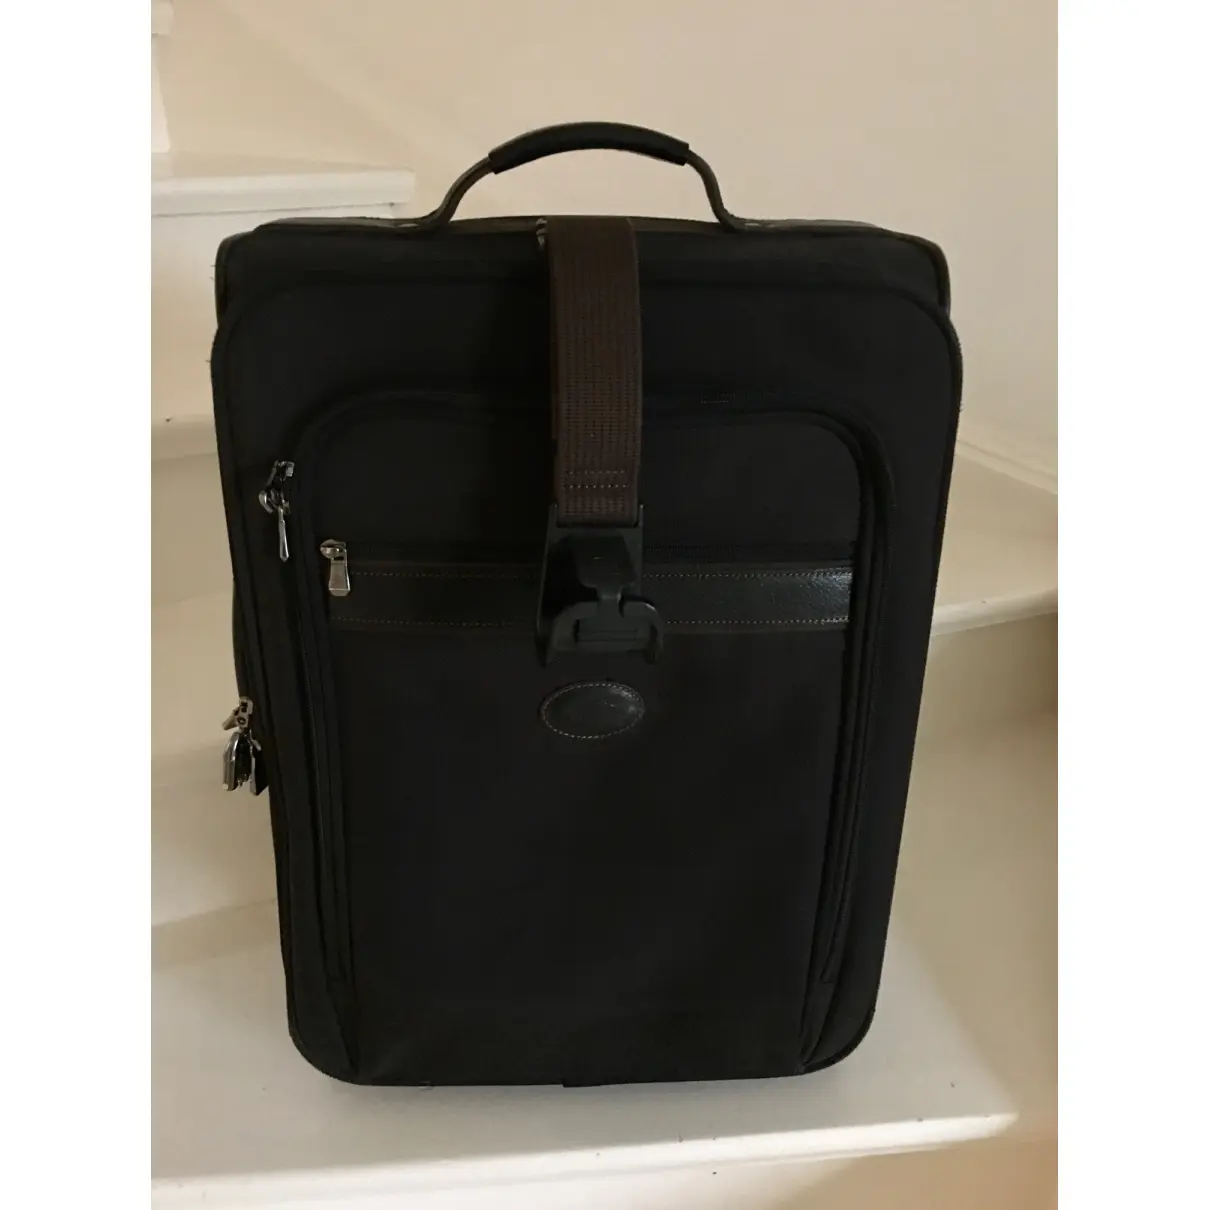 Buy Longchamp Travel bag online